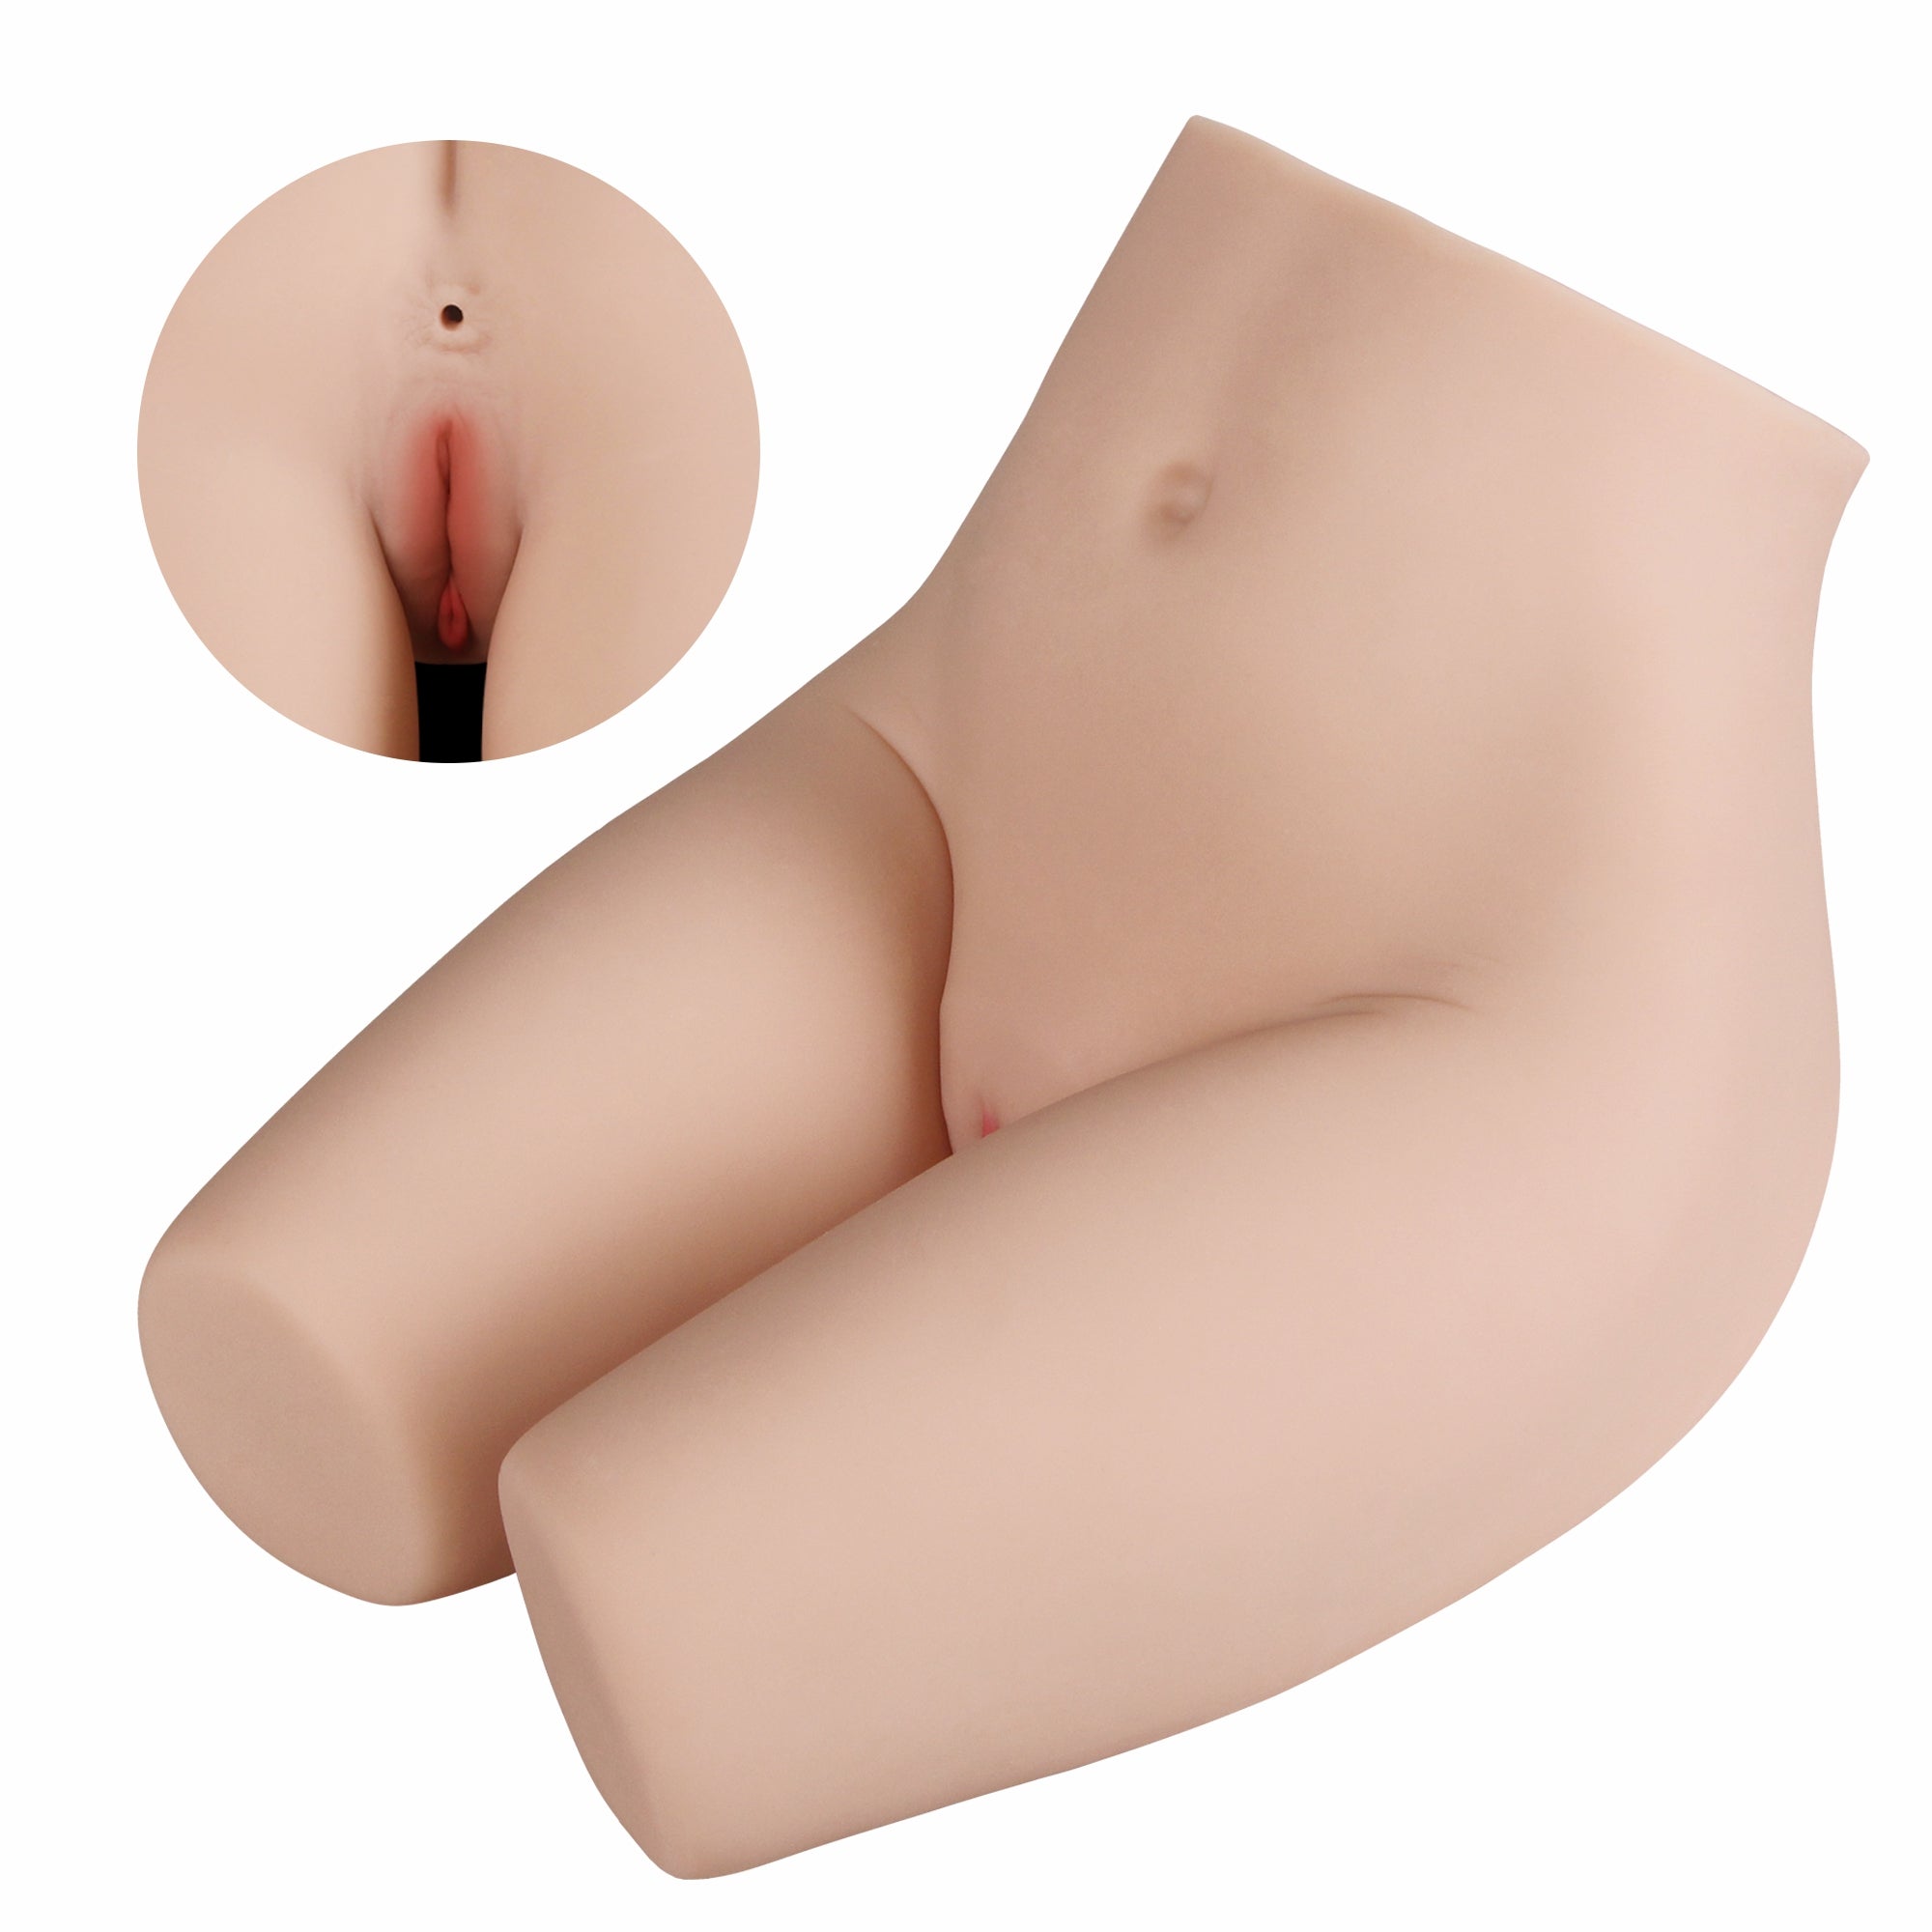 Male leg mold big buttock silicone lower body double point solid masturbation